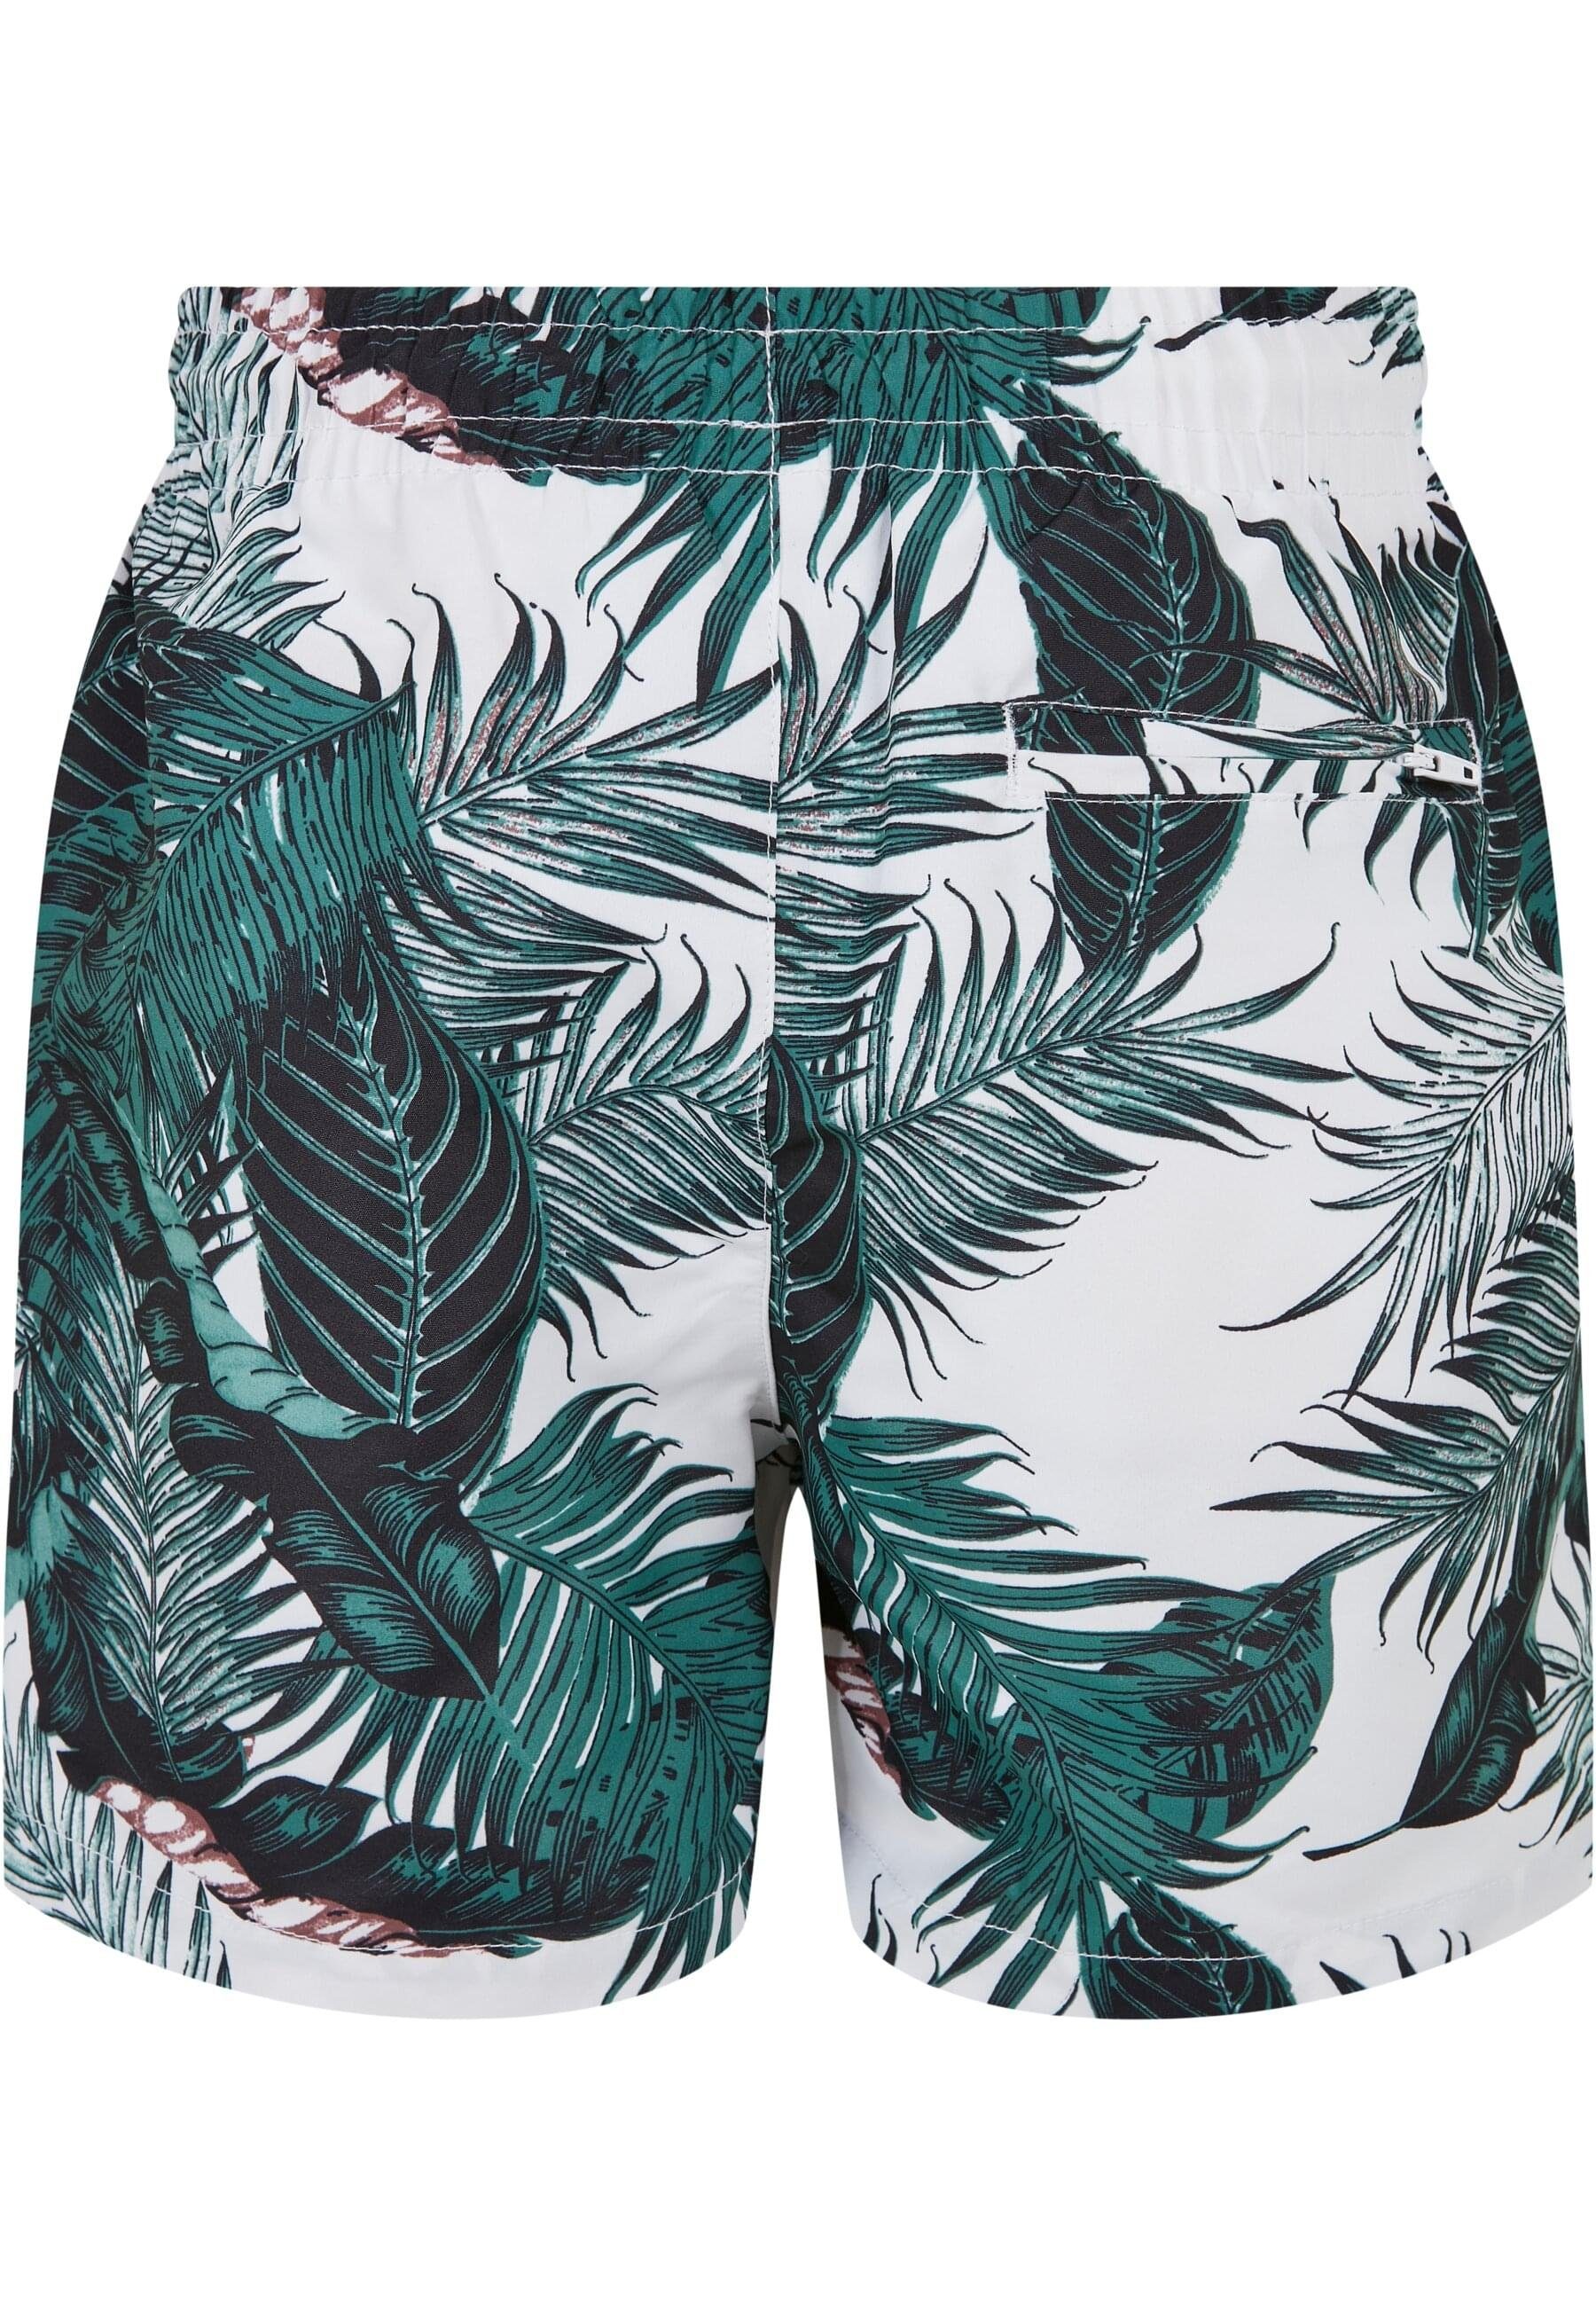 palm Swim leaves Shorts CLASSICS URBAN aop Boys Pattern Herren Badeshorts